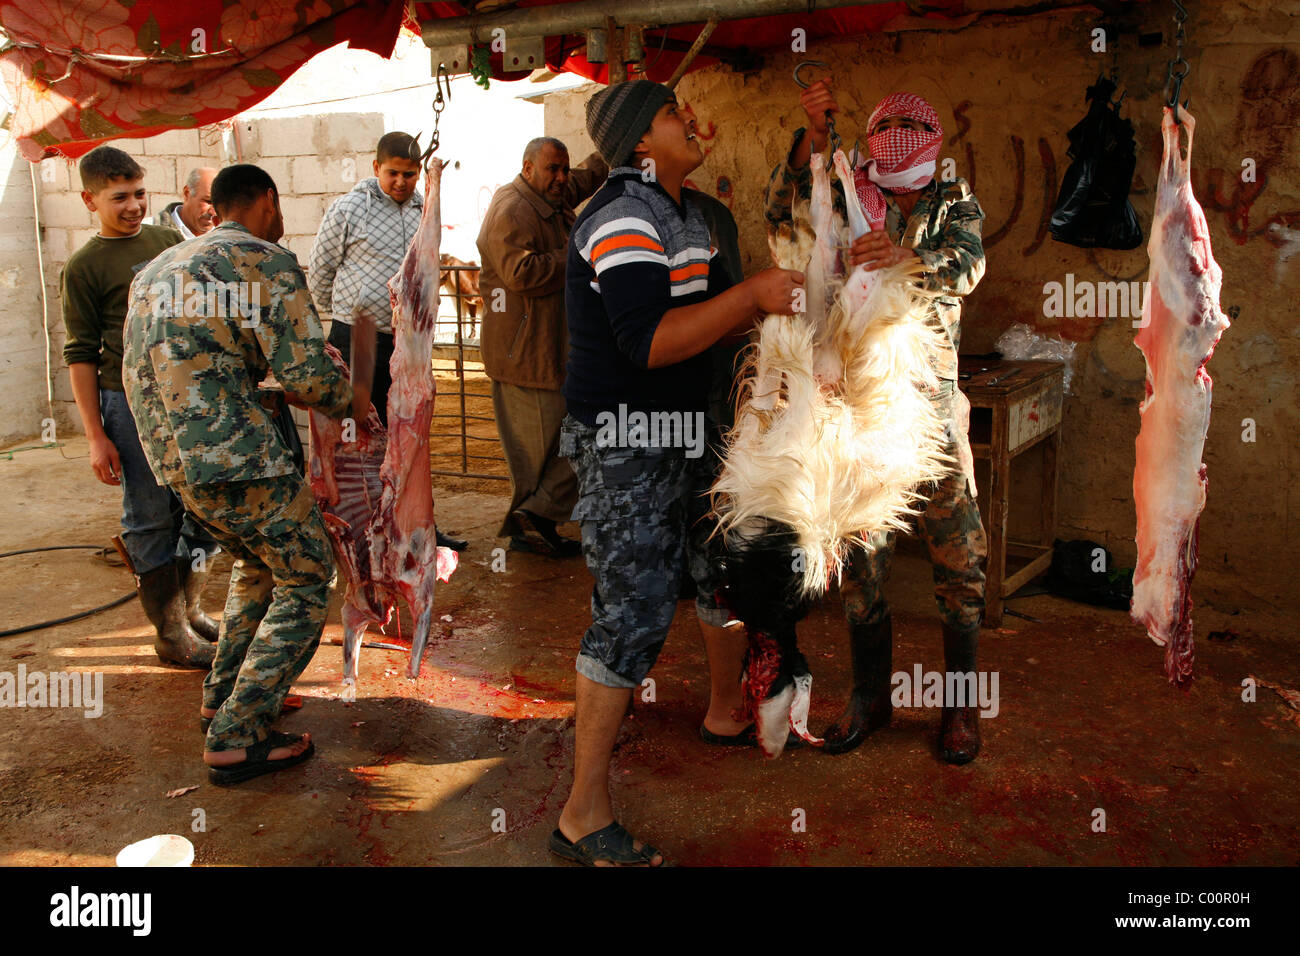 Slaughtering goats for the eid celebrations, Jordan. Stock Photo